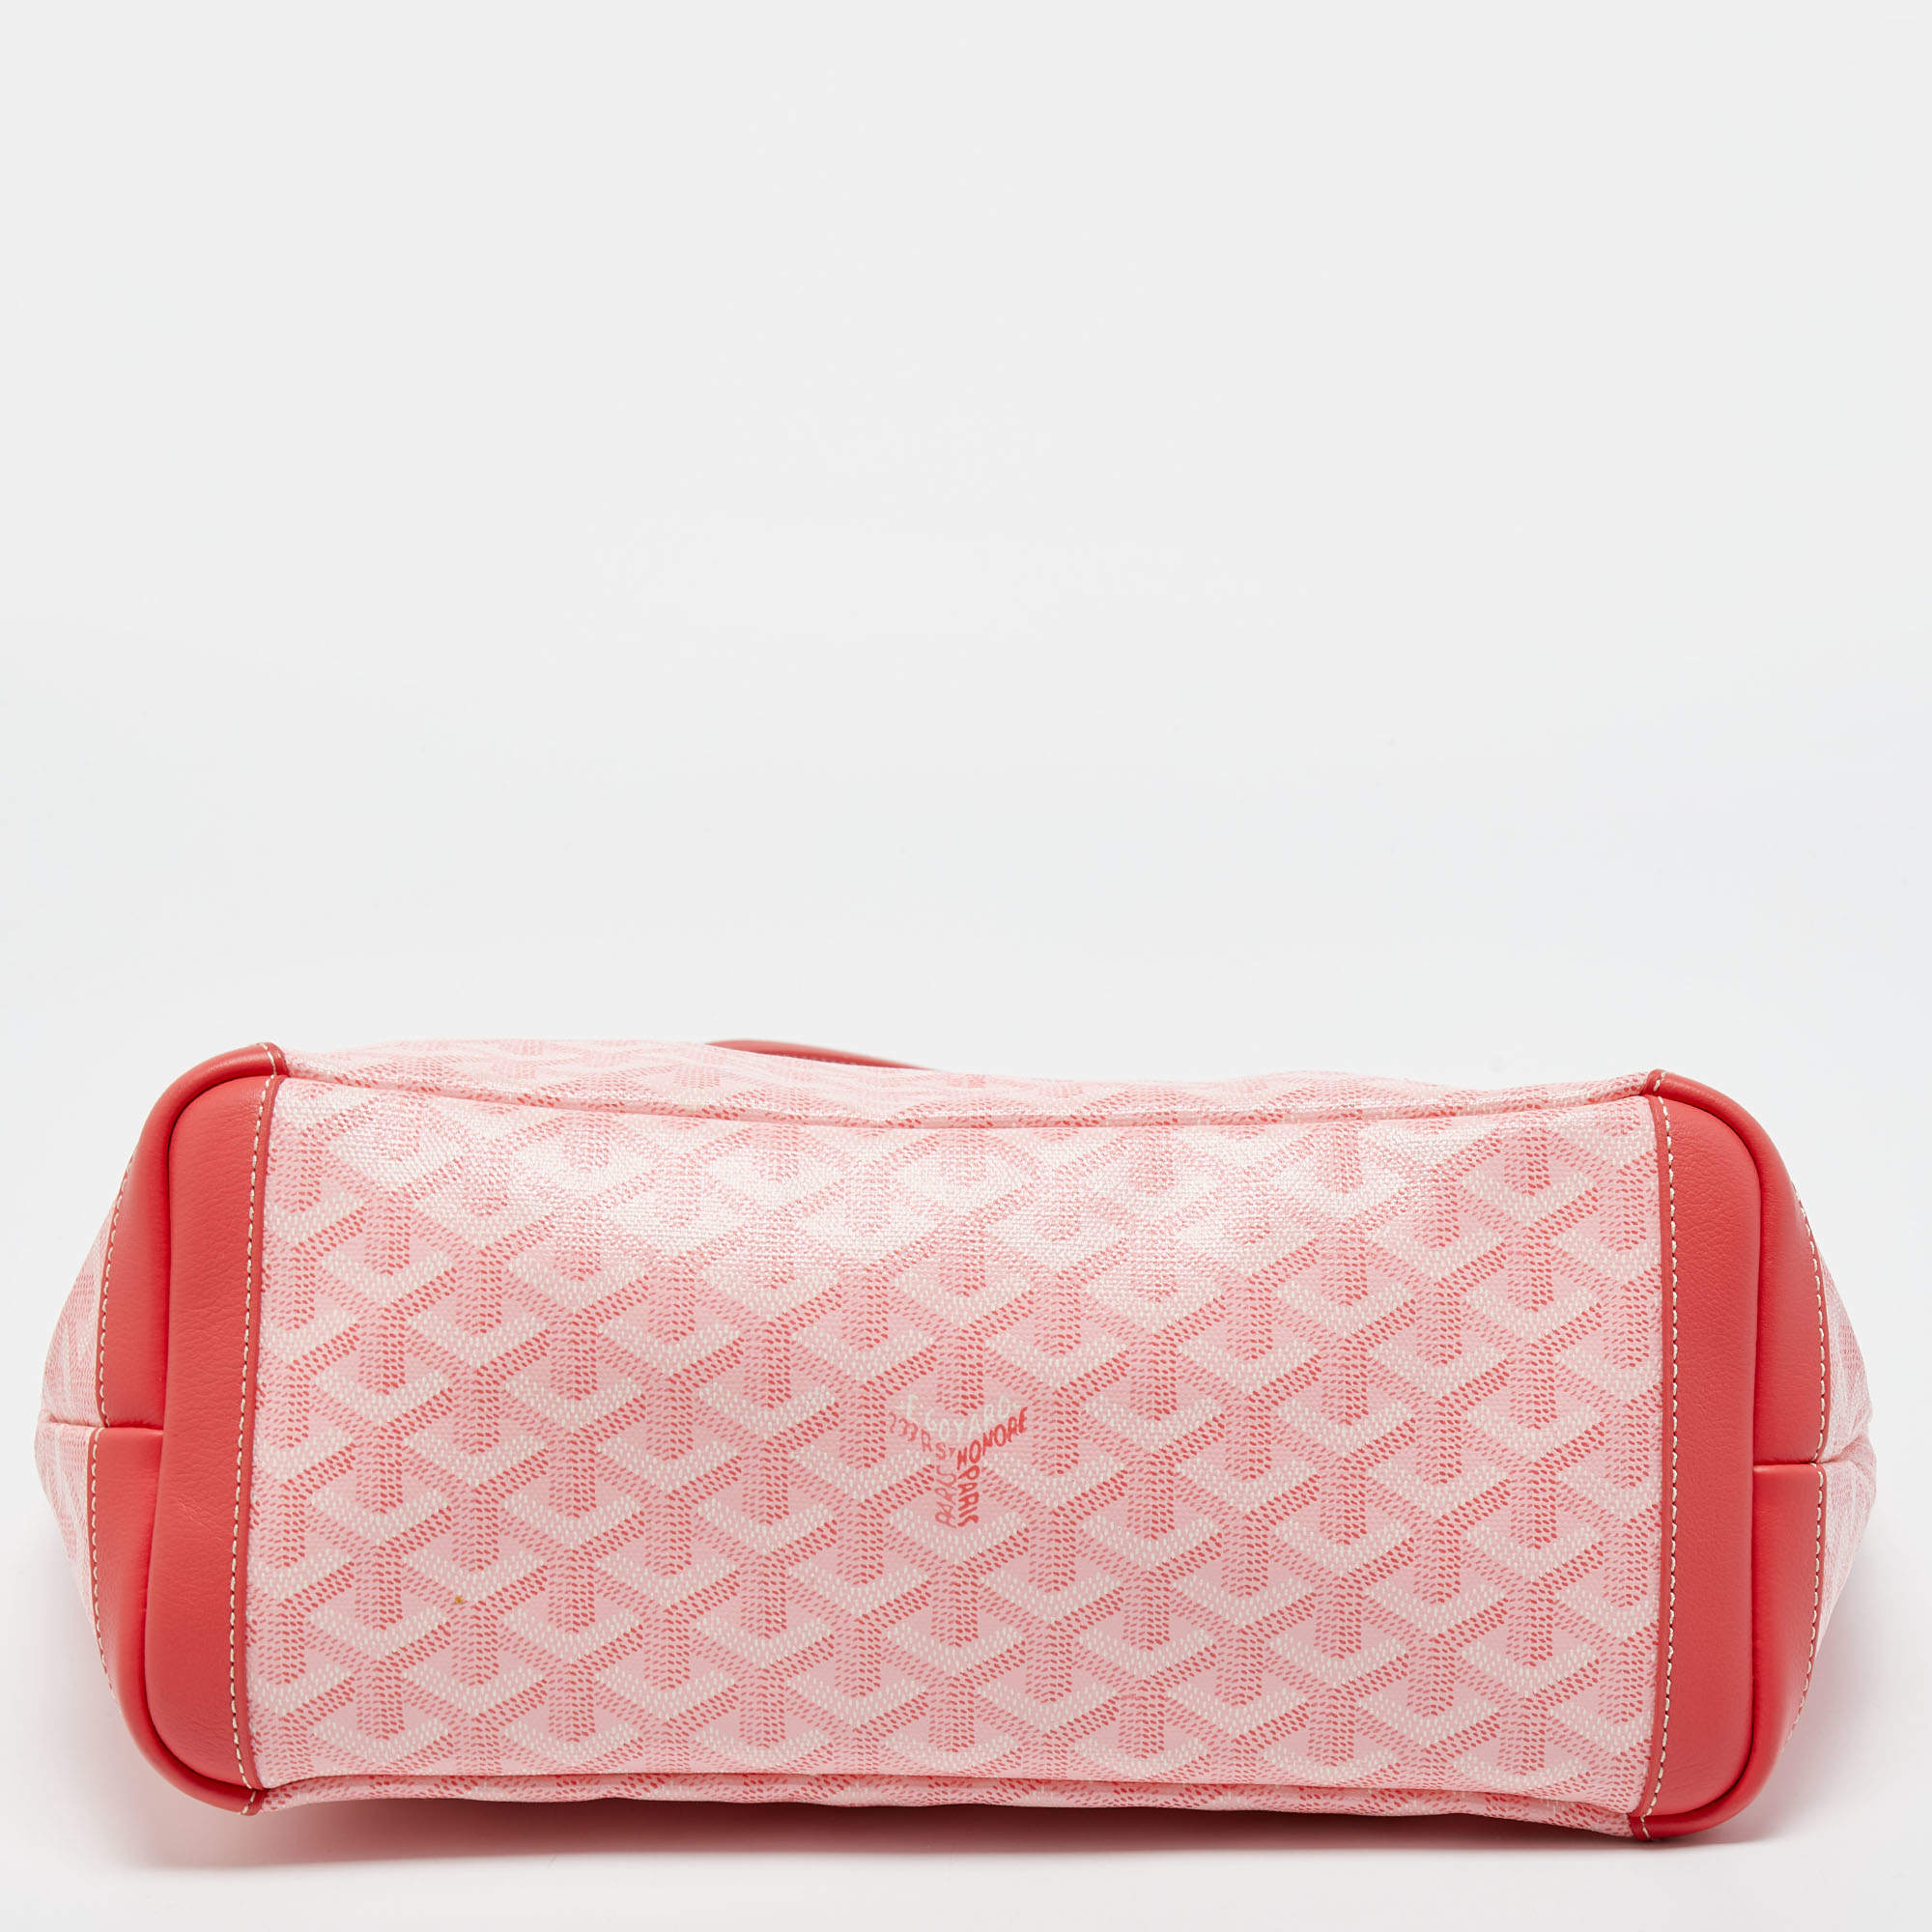 Goyard Goyardine Artois PM - Pink Totes, Handbags - GOY33400